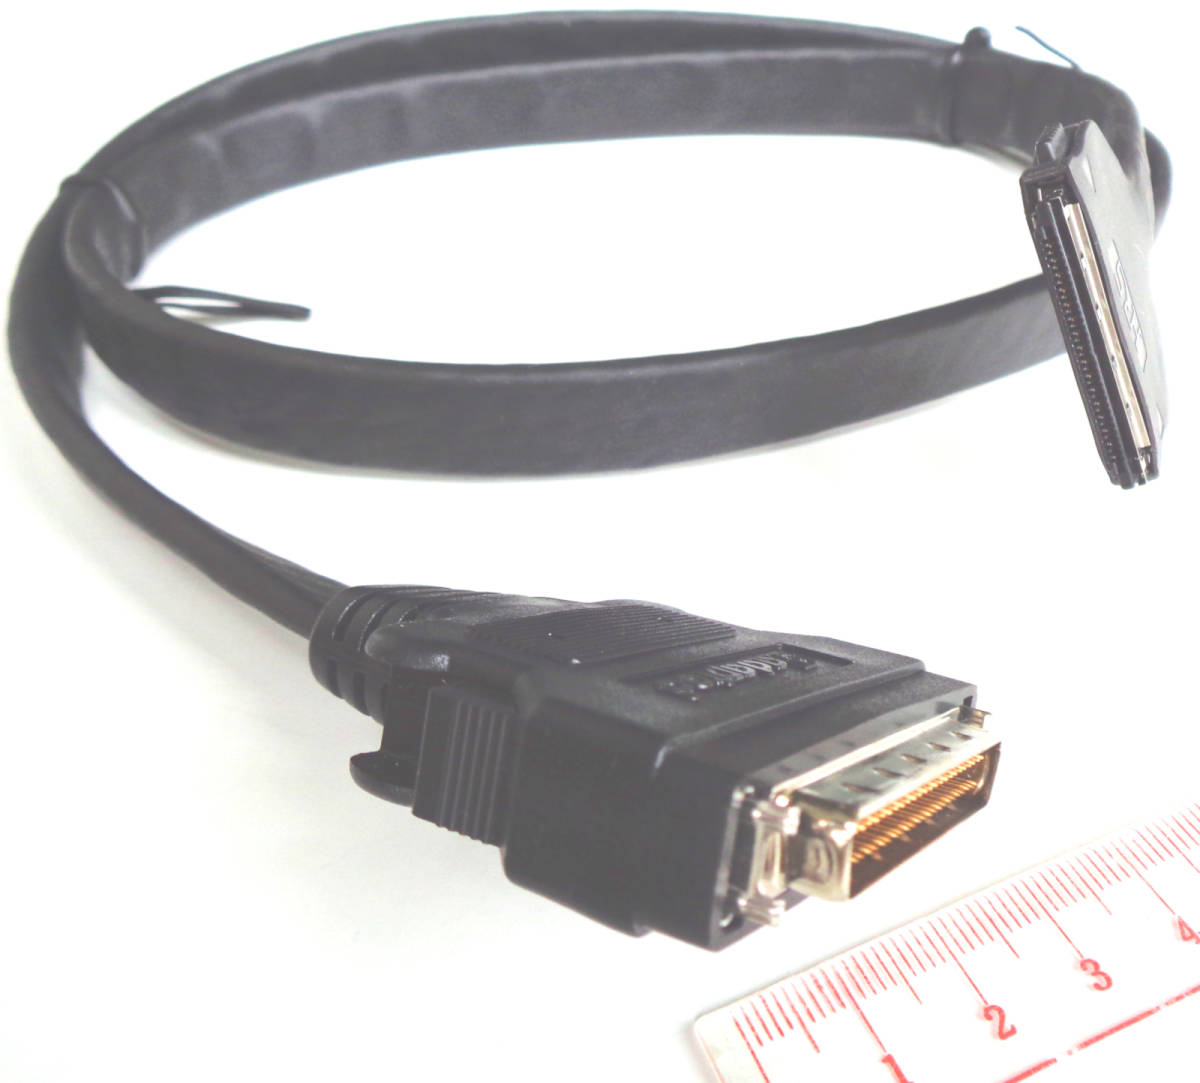  new old goods SCSI - PCMCIA adaptor cable 90cm (APA-1460 SlimSCSI kit for )